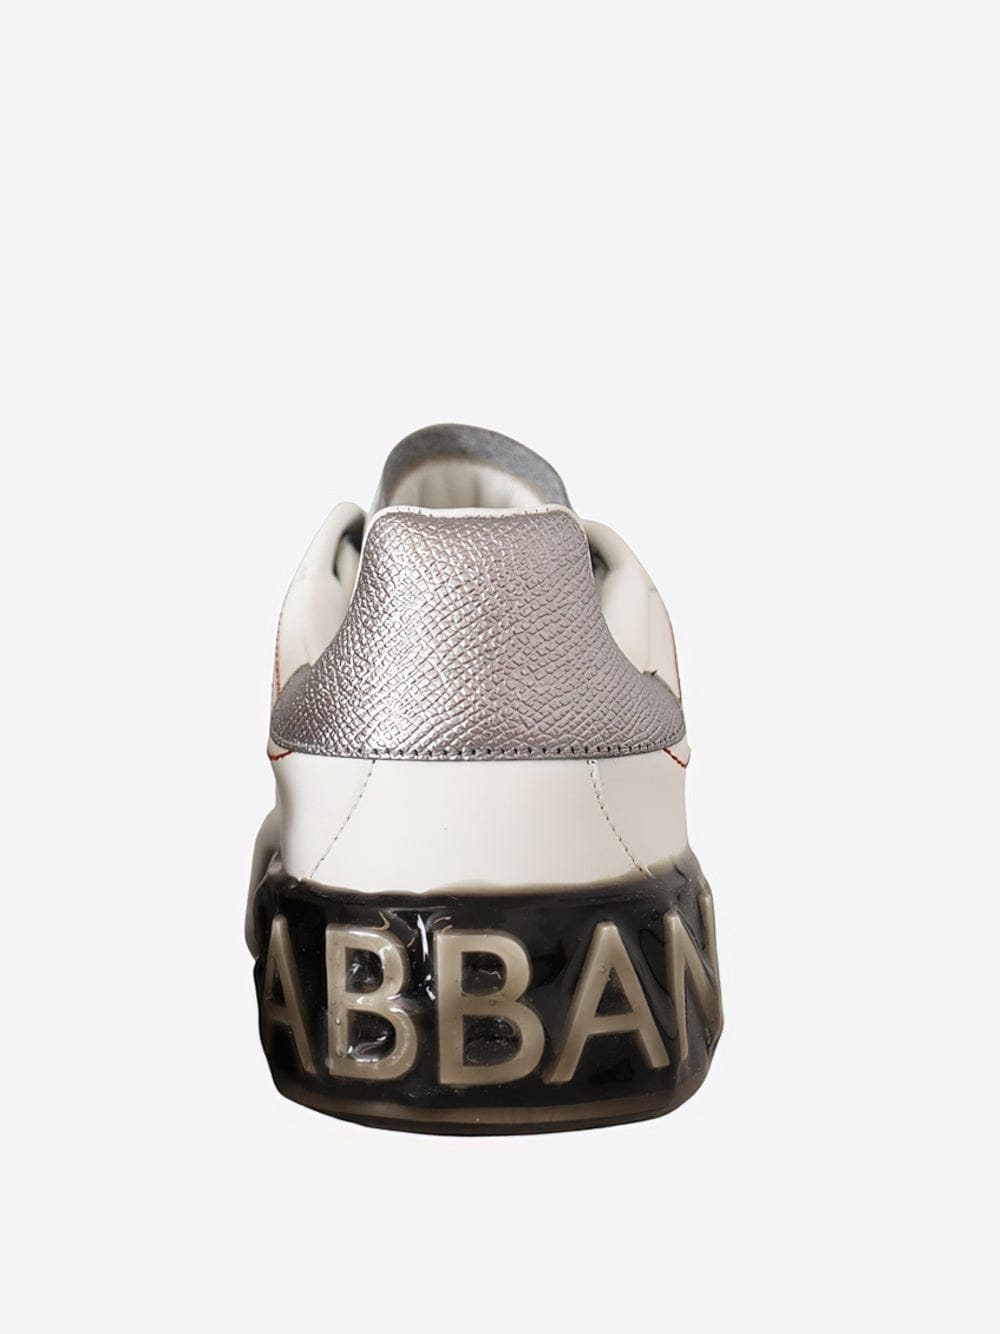 Dolce & Gabbana Portofino Melt Leather Sneakers